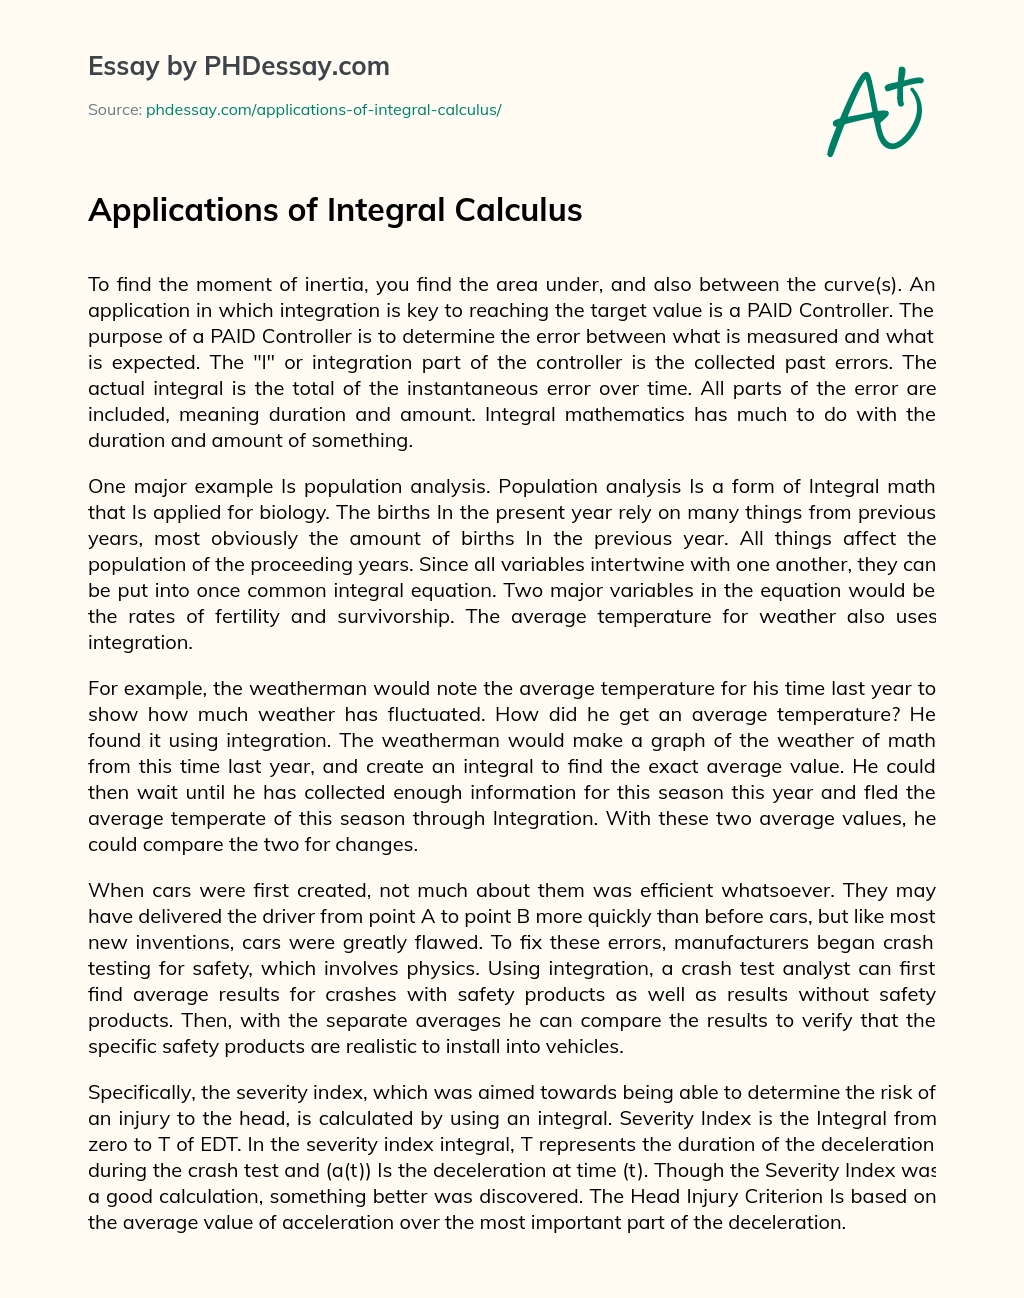 Applications of Integral Calculus essay